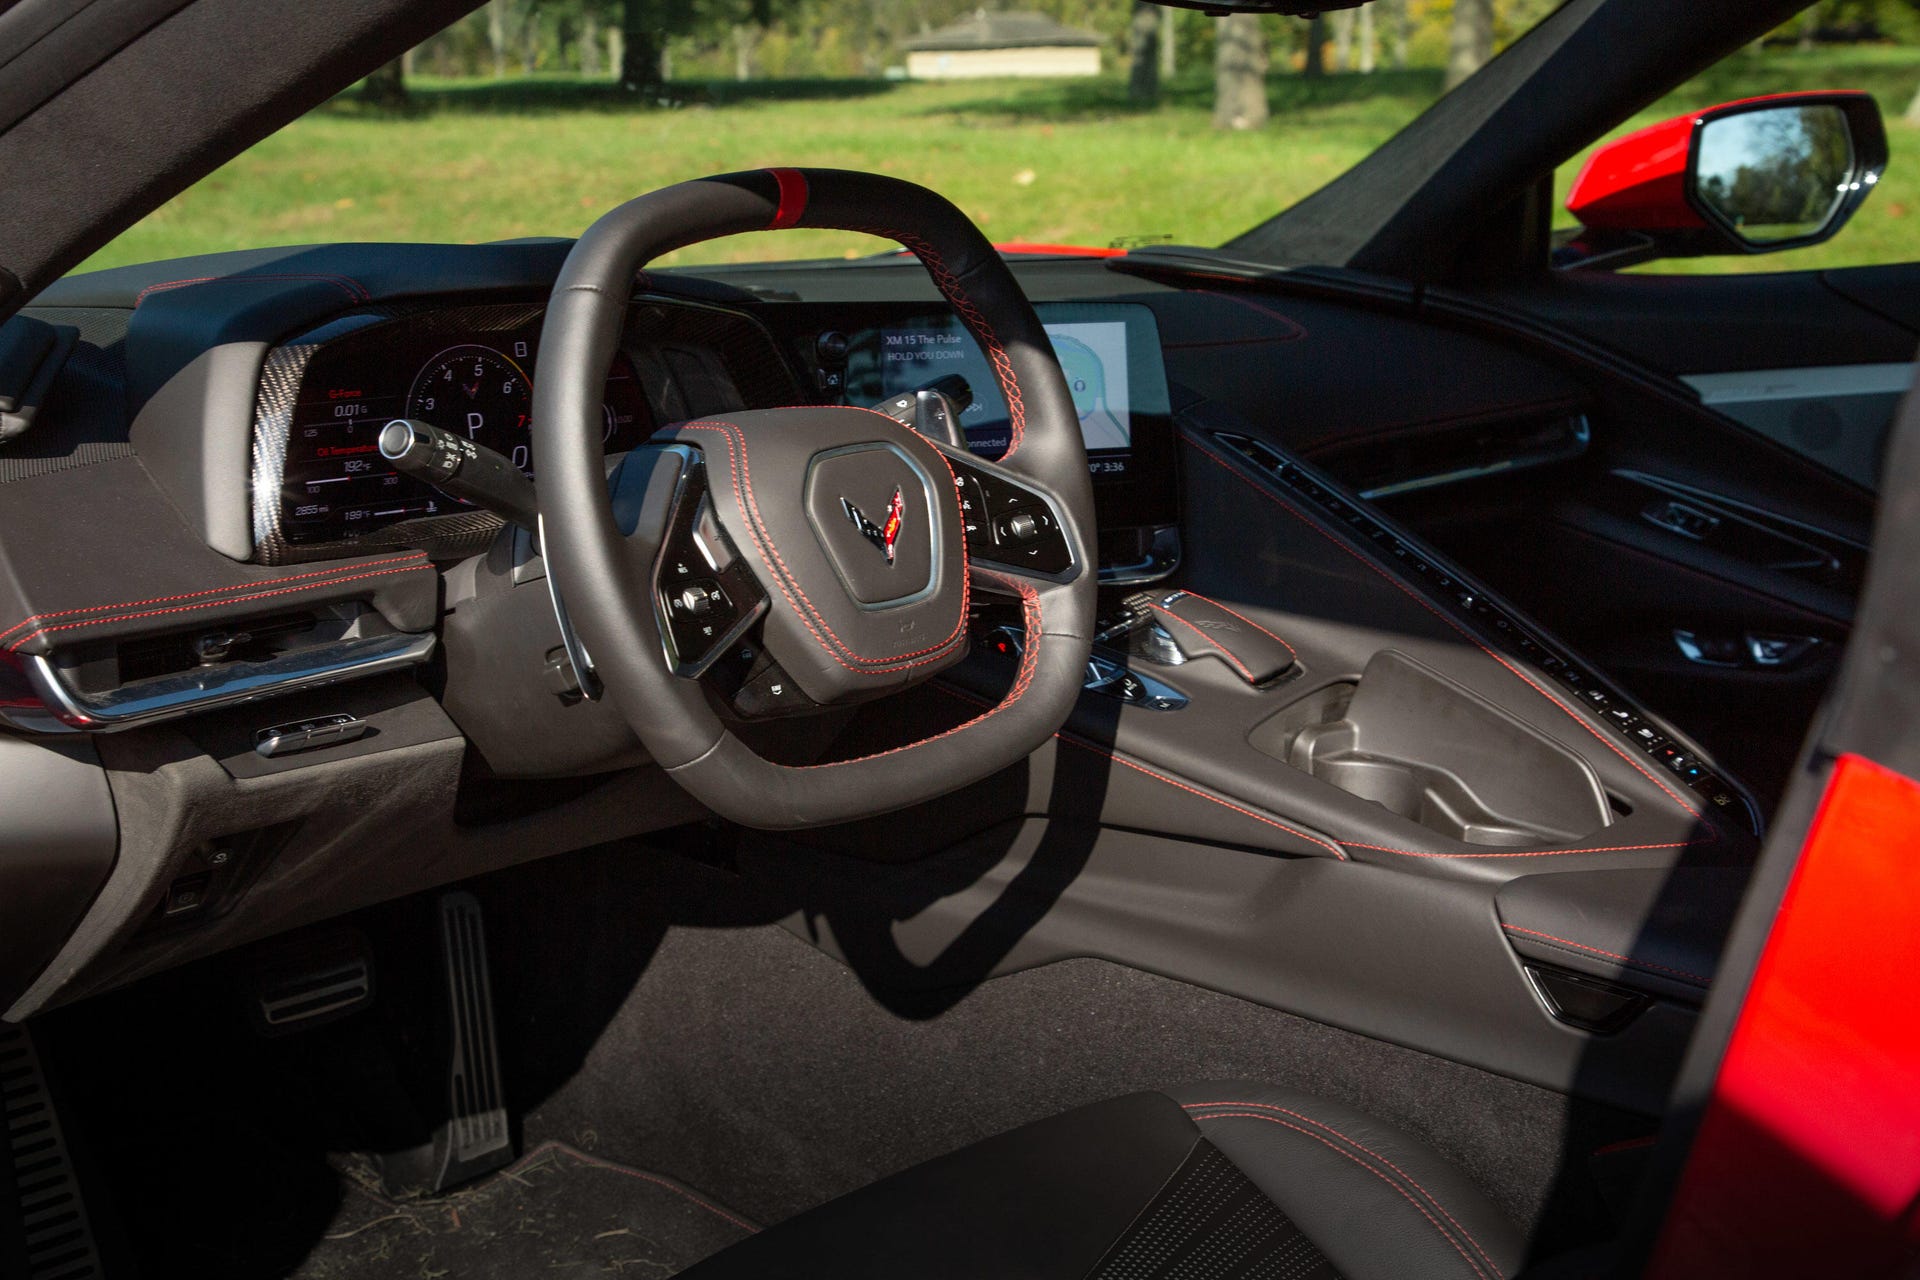 2020 Chevy Corvette Stingray interior